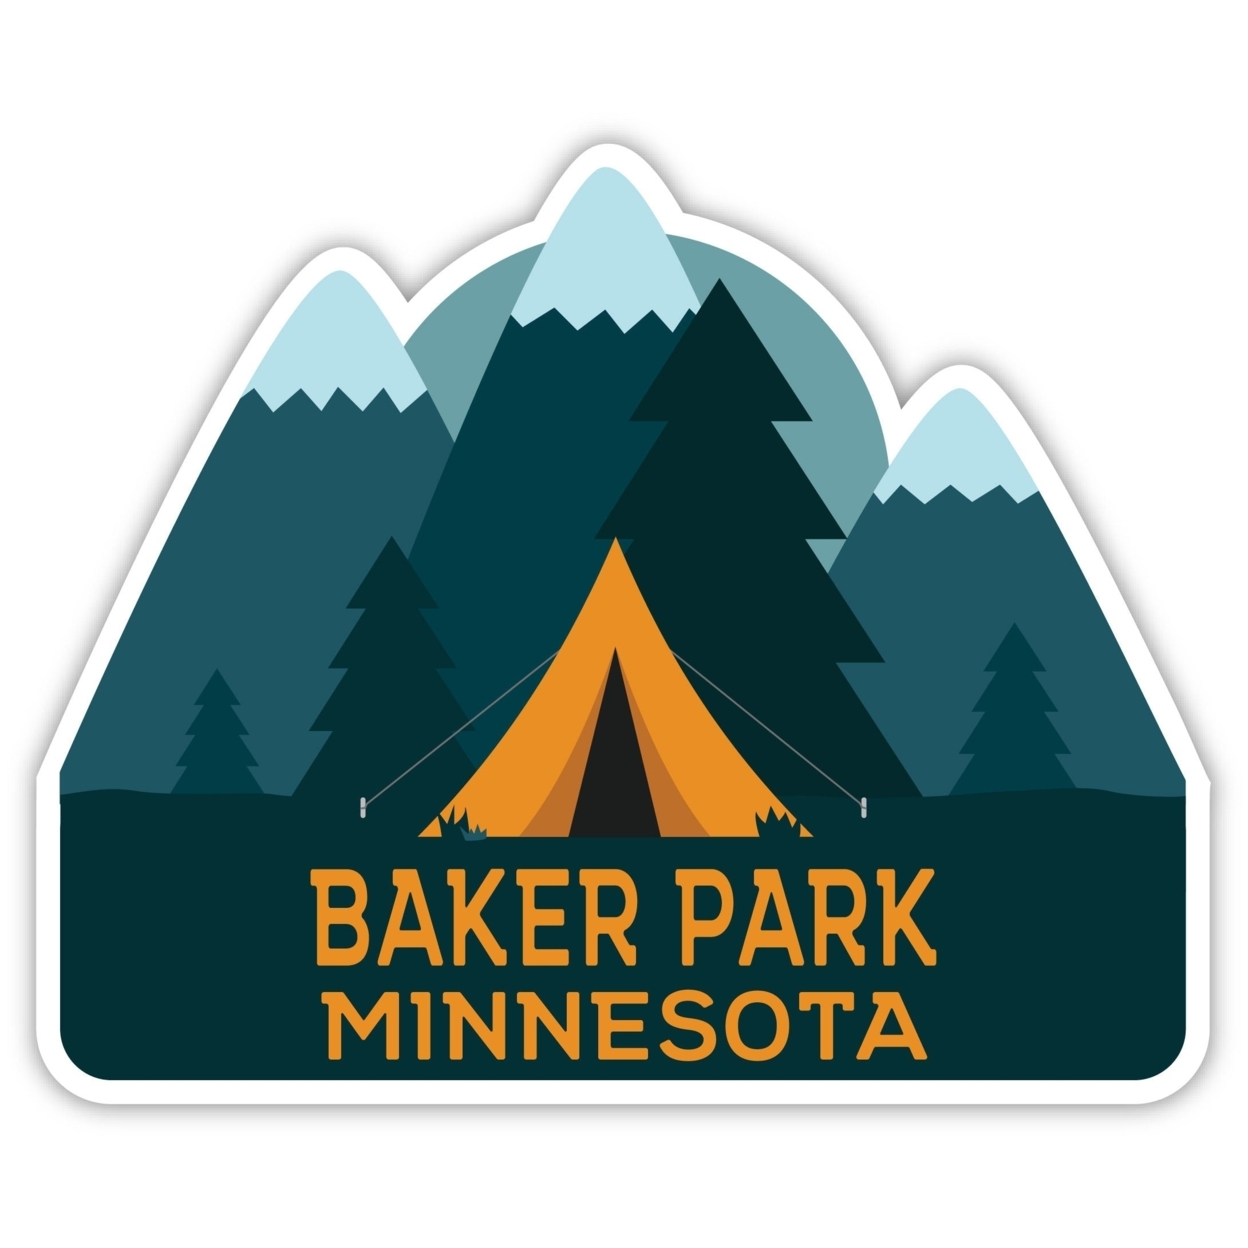 Baker Park Minnesota Souvenir Decorative Stickers (Choose Theme And Size) - 4-Pack, 4-Inch, Tent